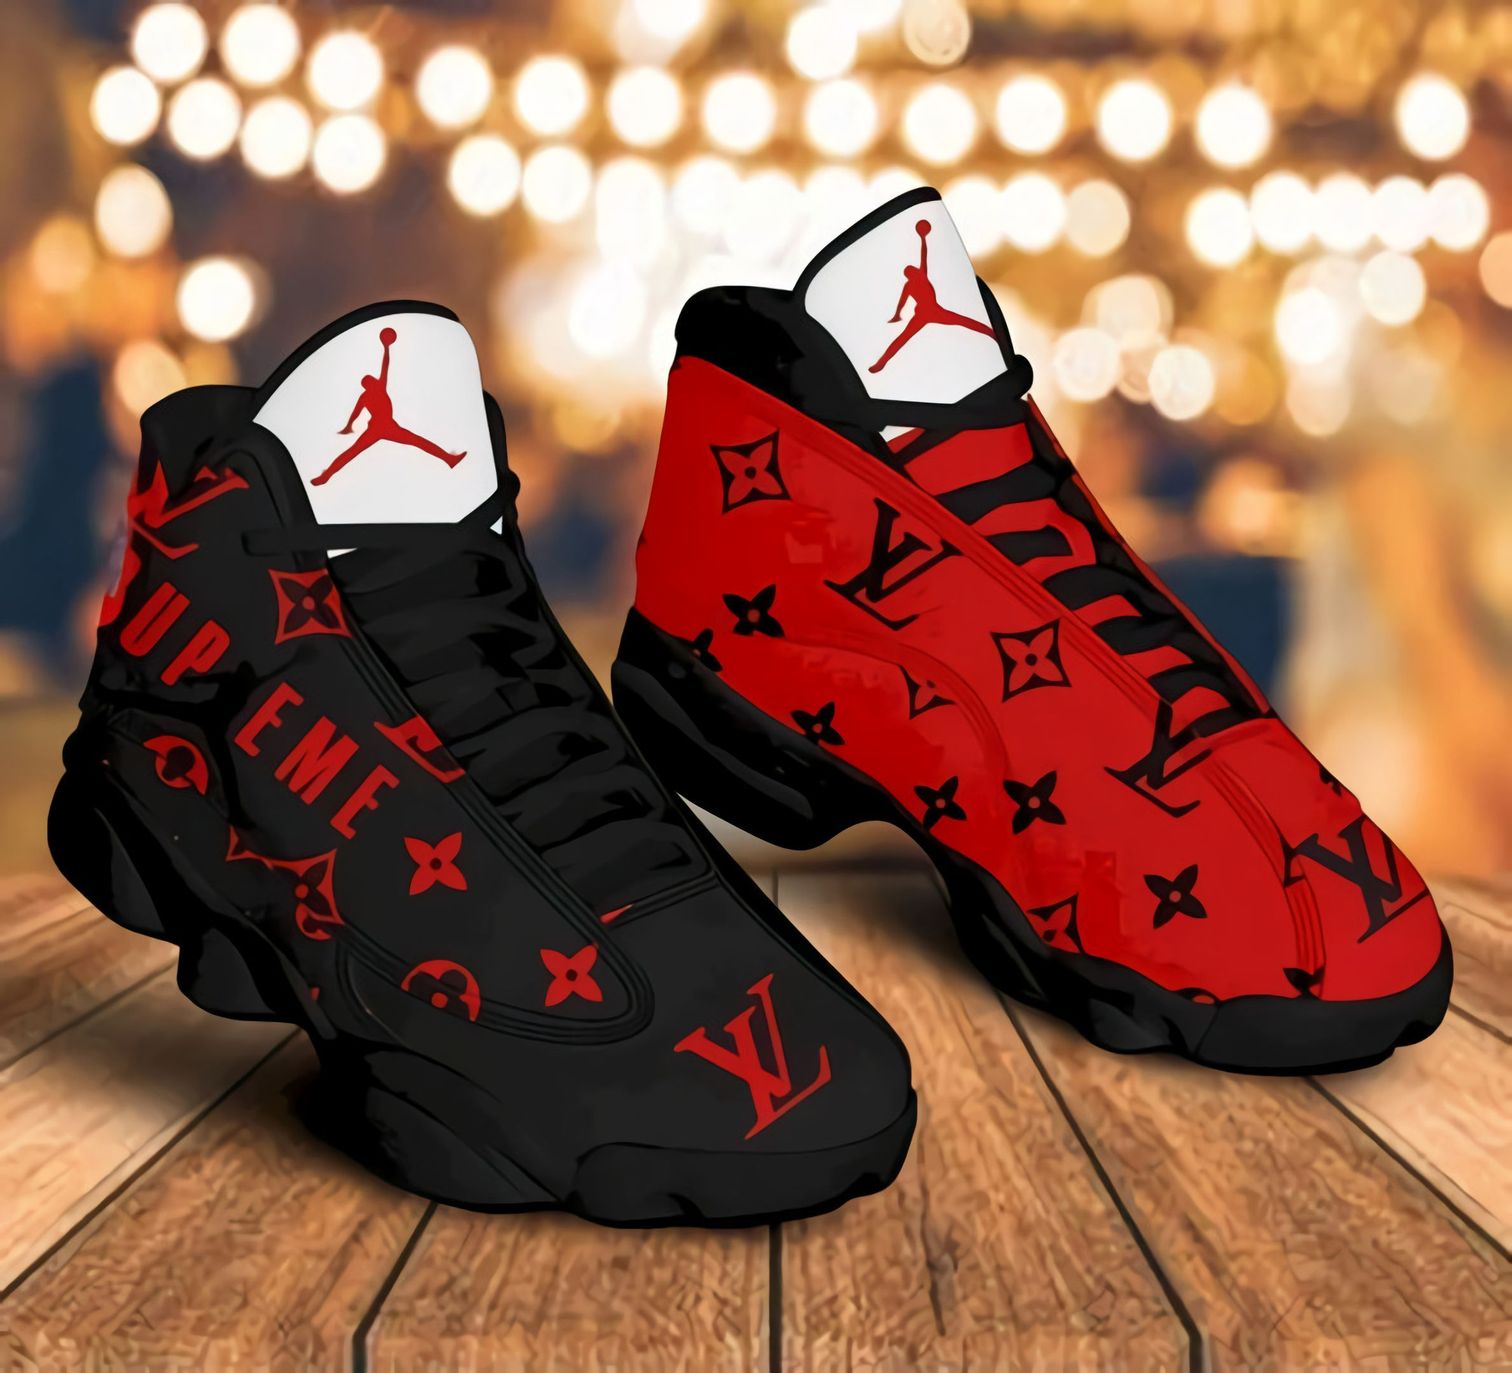 NEW TREND] Air jordan 13 Mix Louis Vuitton Sneaker, Shoes Limited